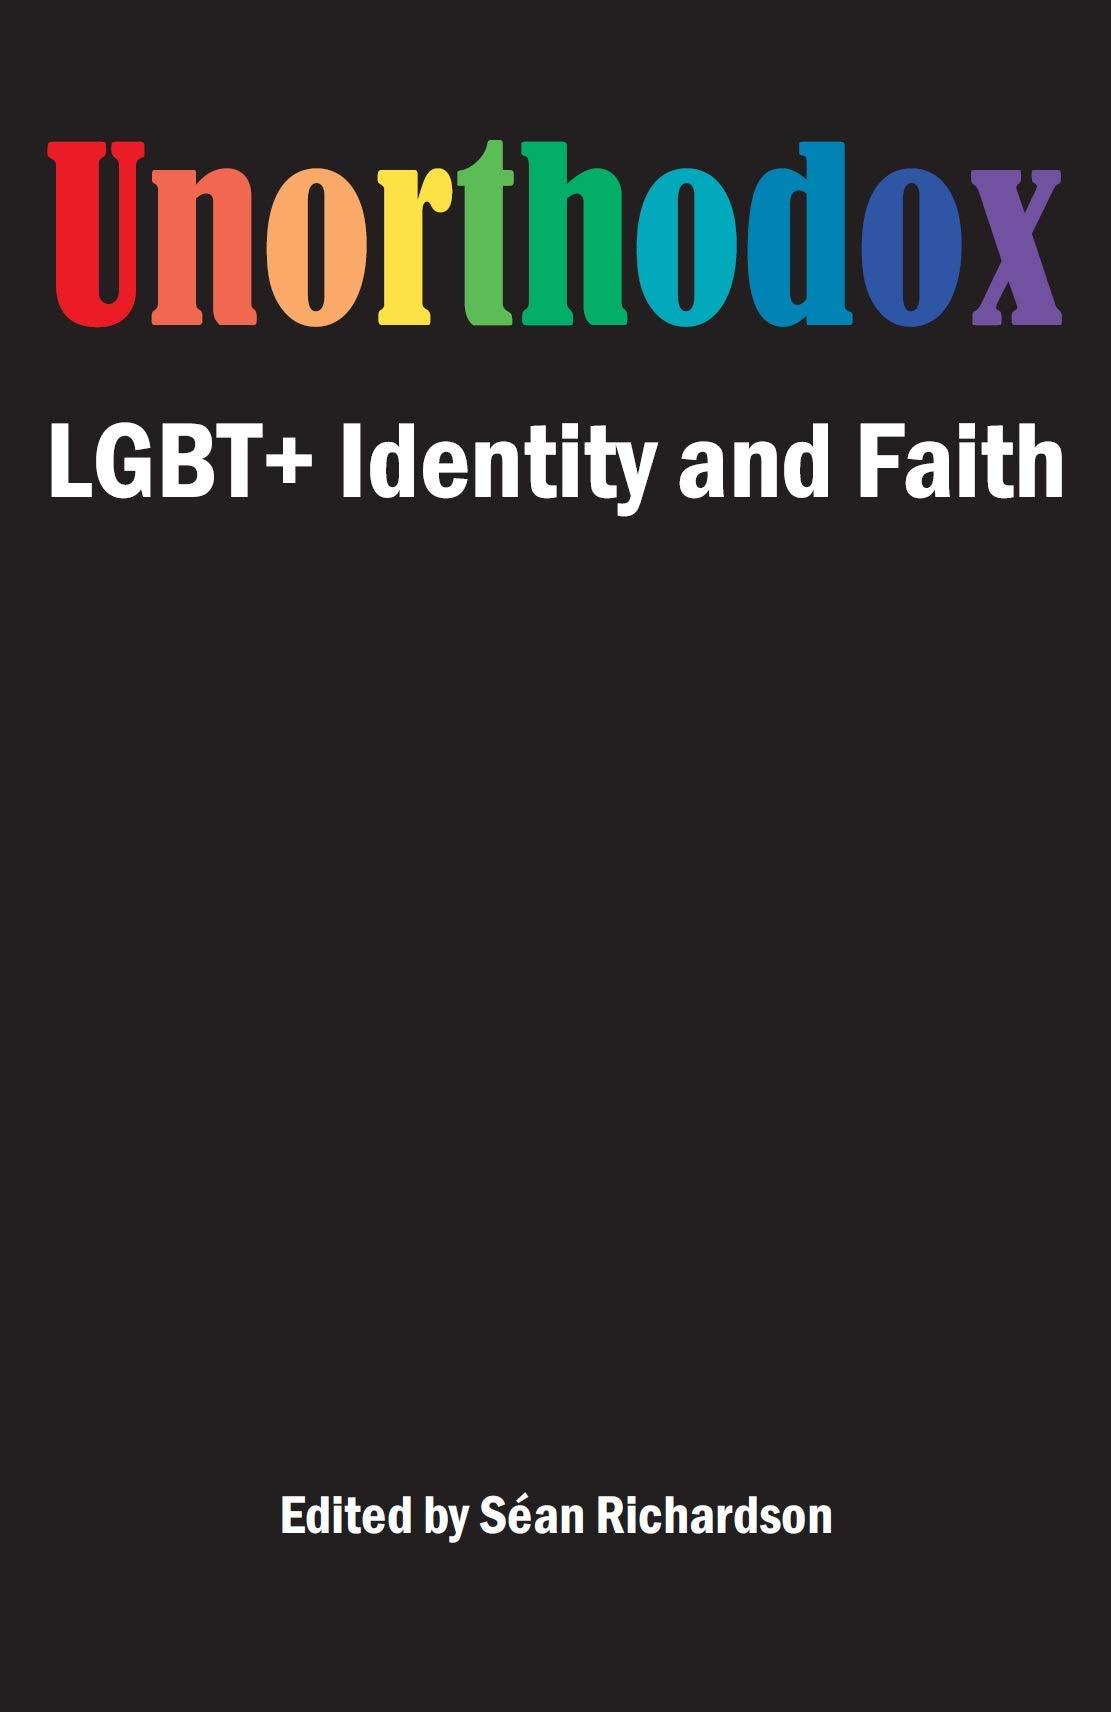 Unorthodox : LGBT+ Identity and Faith by Sean Richardson